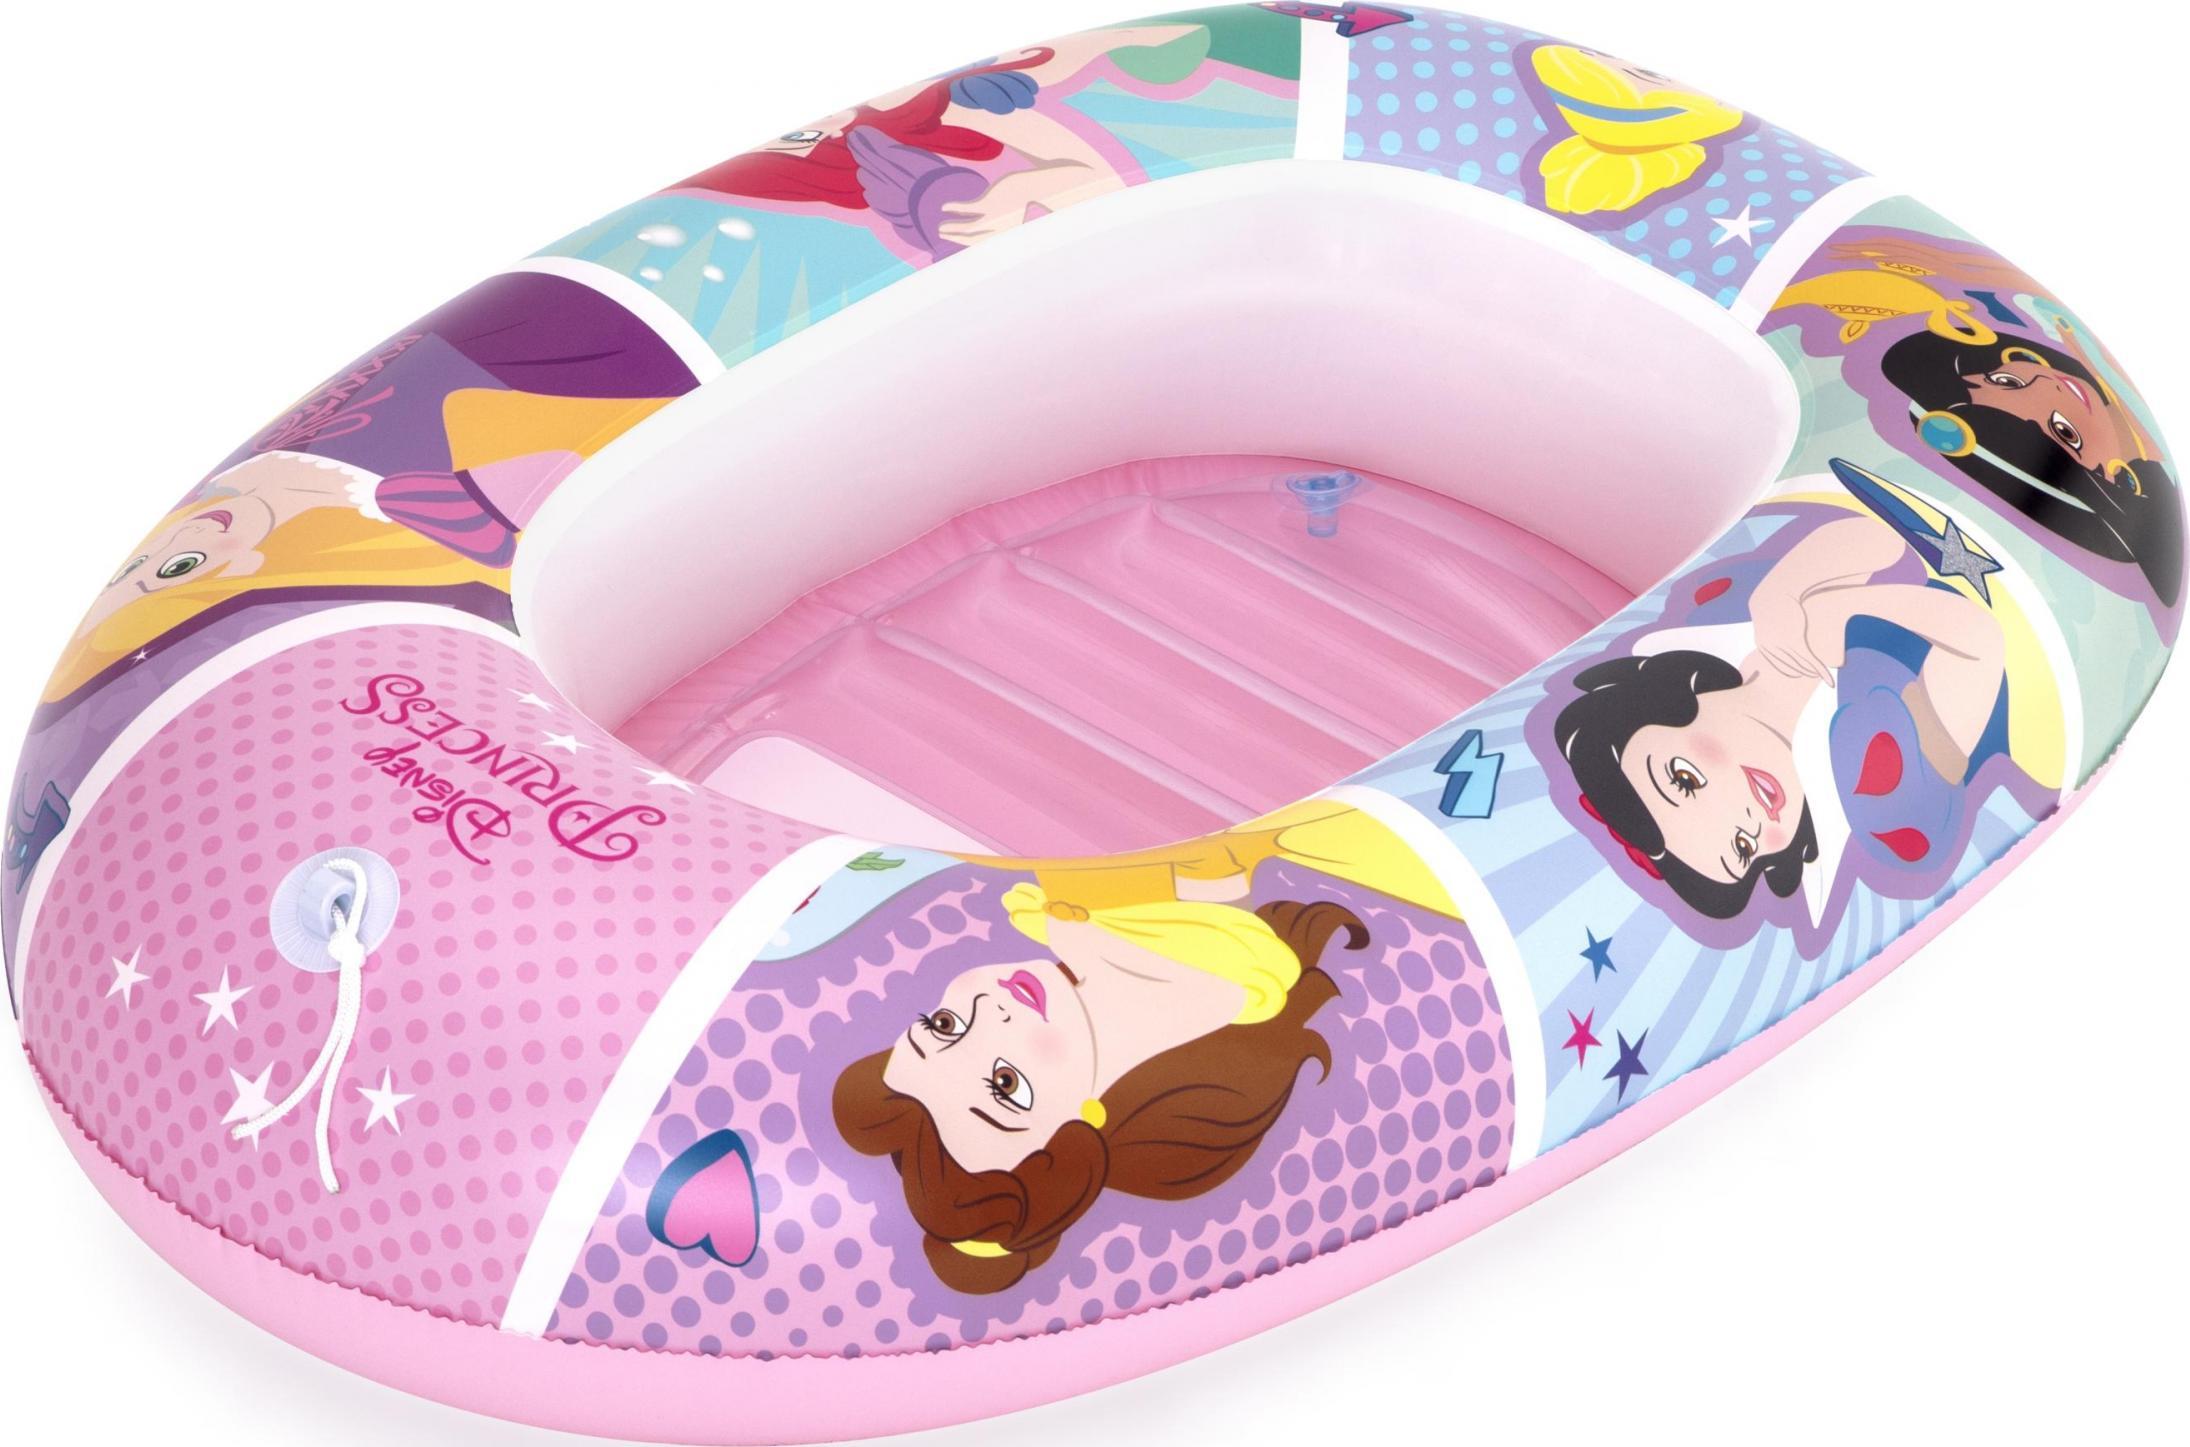 Barca gonflabila pentru copii Bestway Princess 91044, PVC, multicolor, 102 x 61 cm